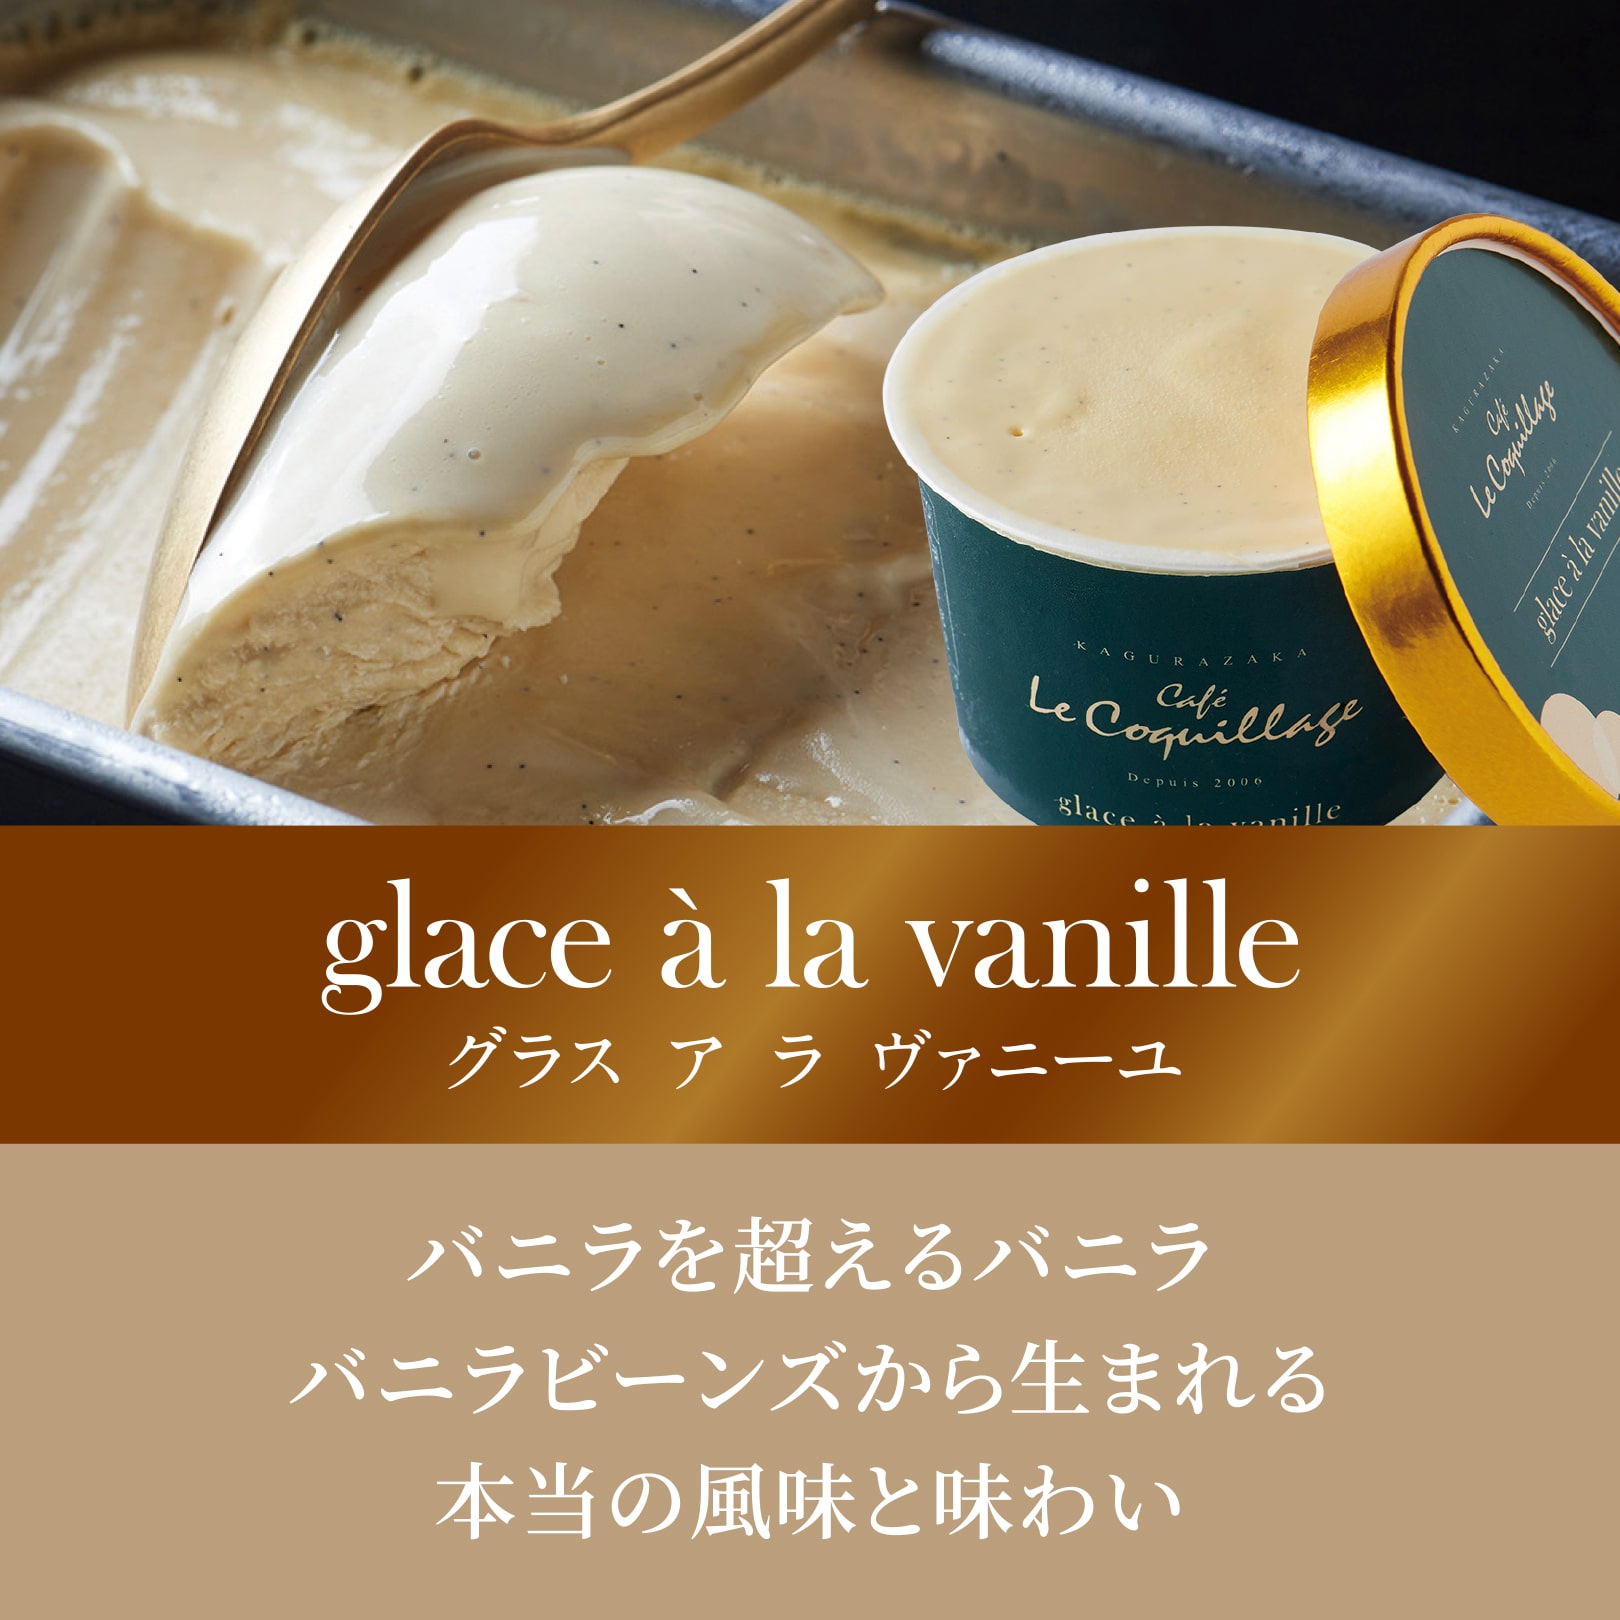 glace à la vanilleグラス ア ラ ヴァニーユ　バニラを超えるバニラバニラビーンズから生まれる本当の風味と味わい